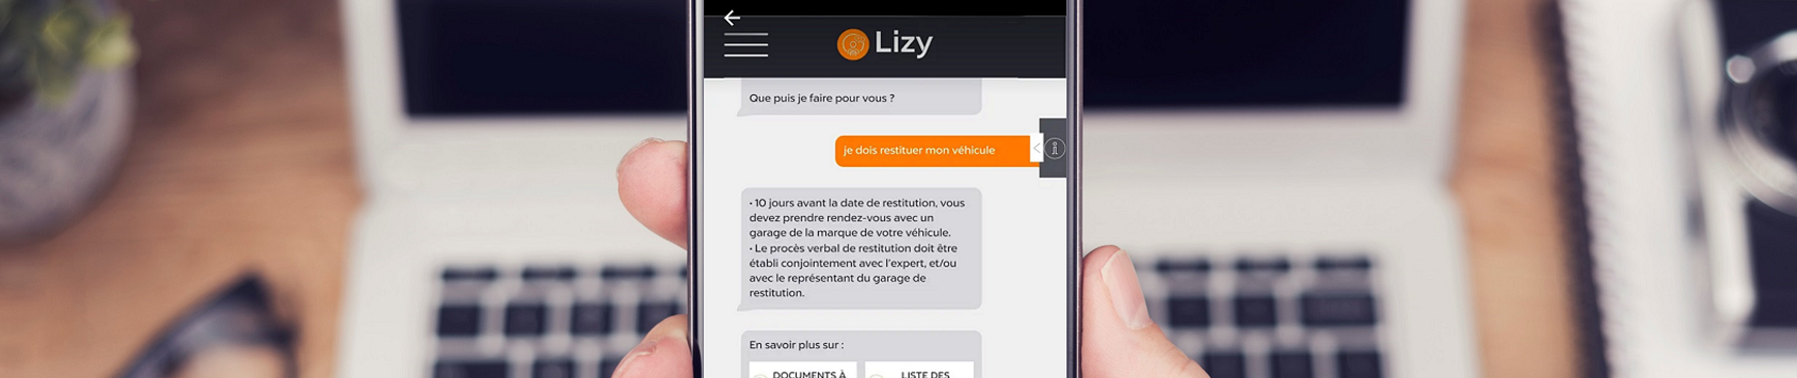 Lizy app France